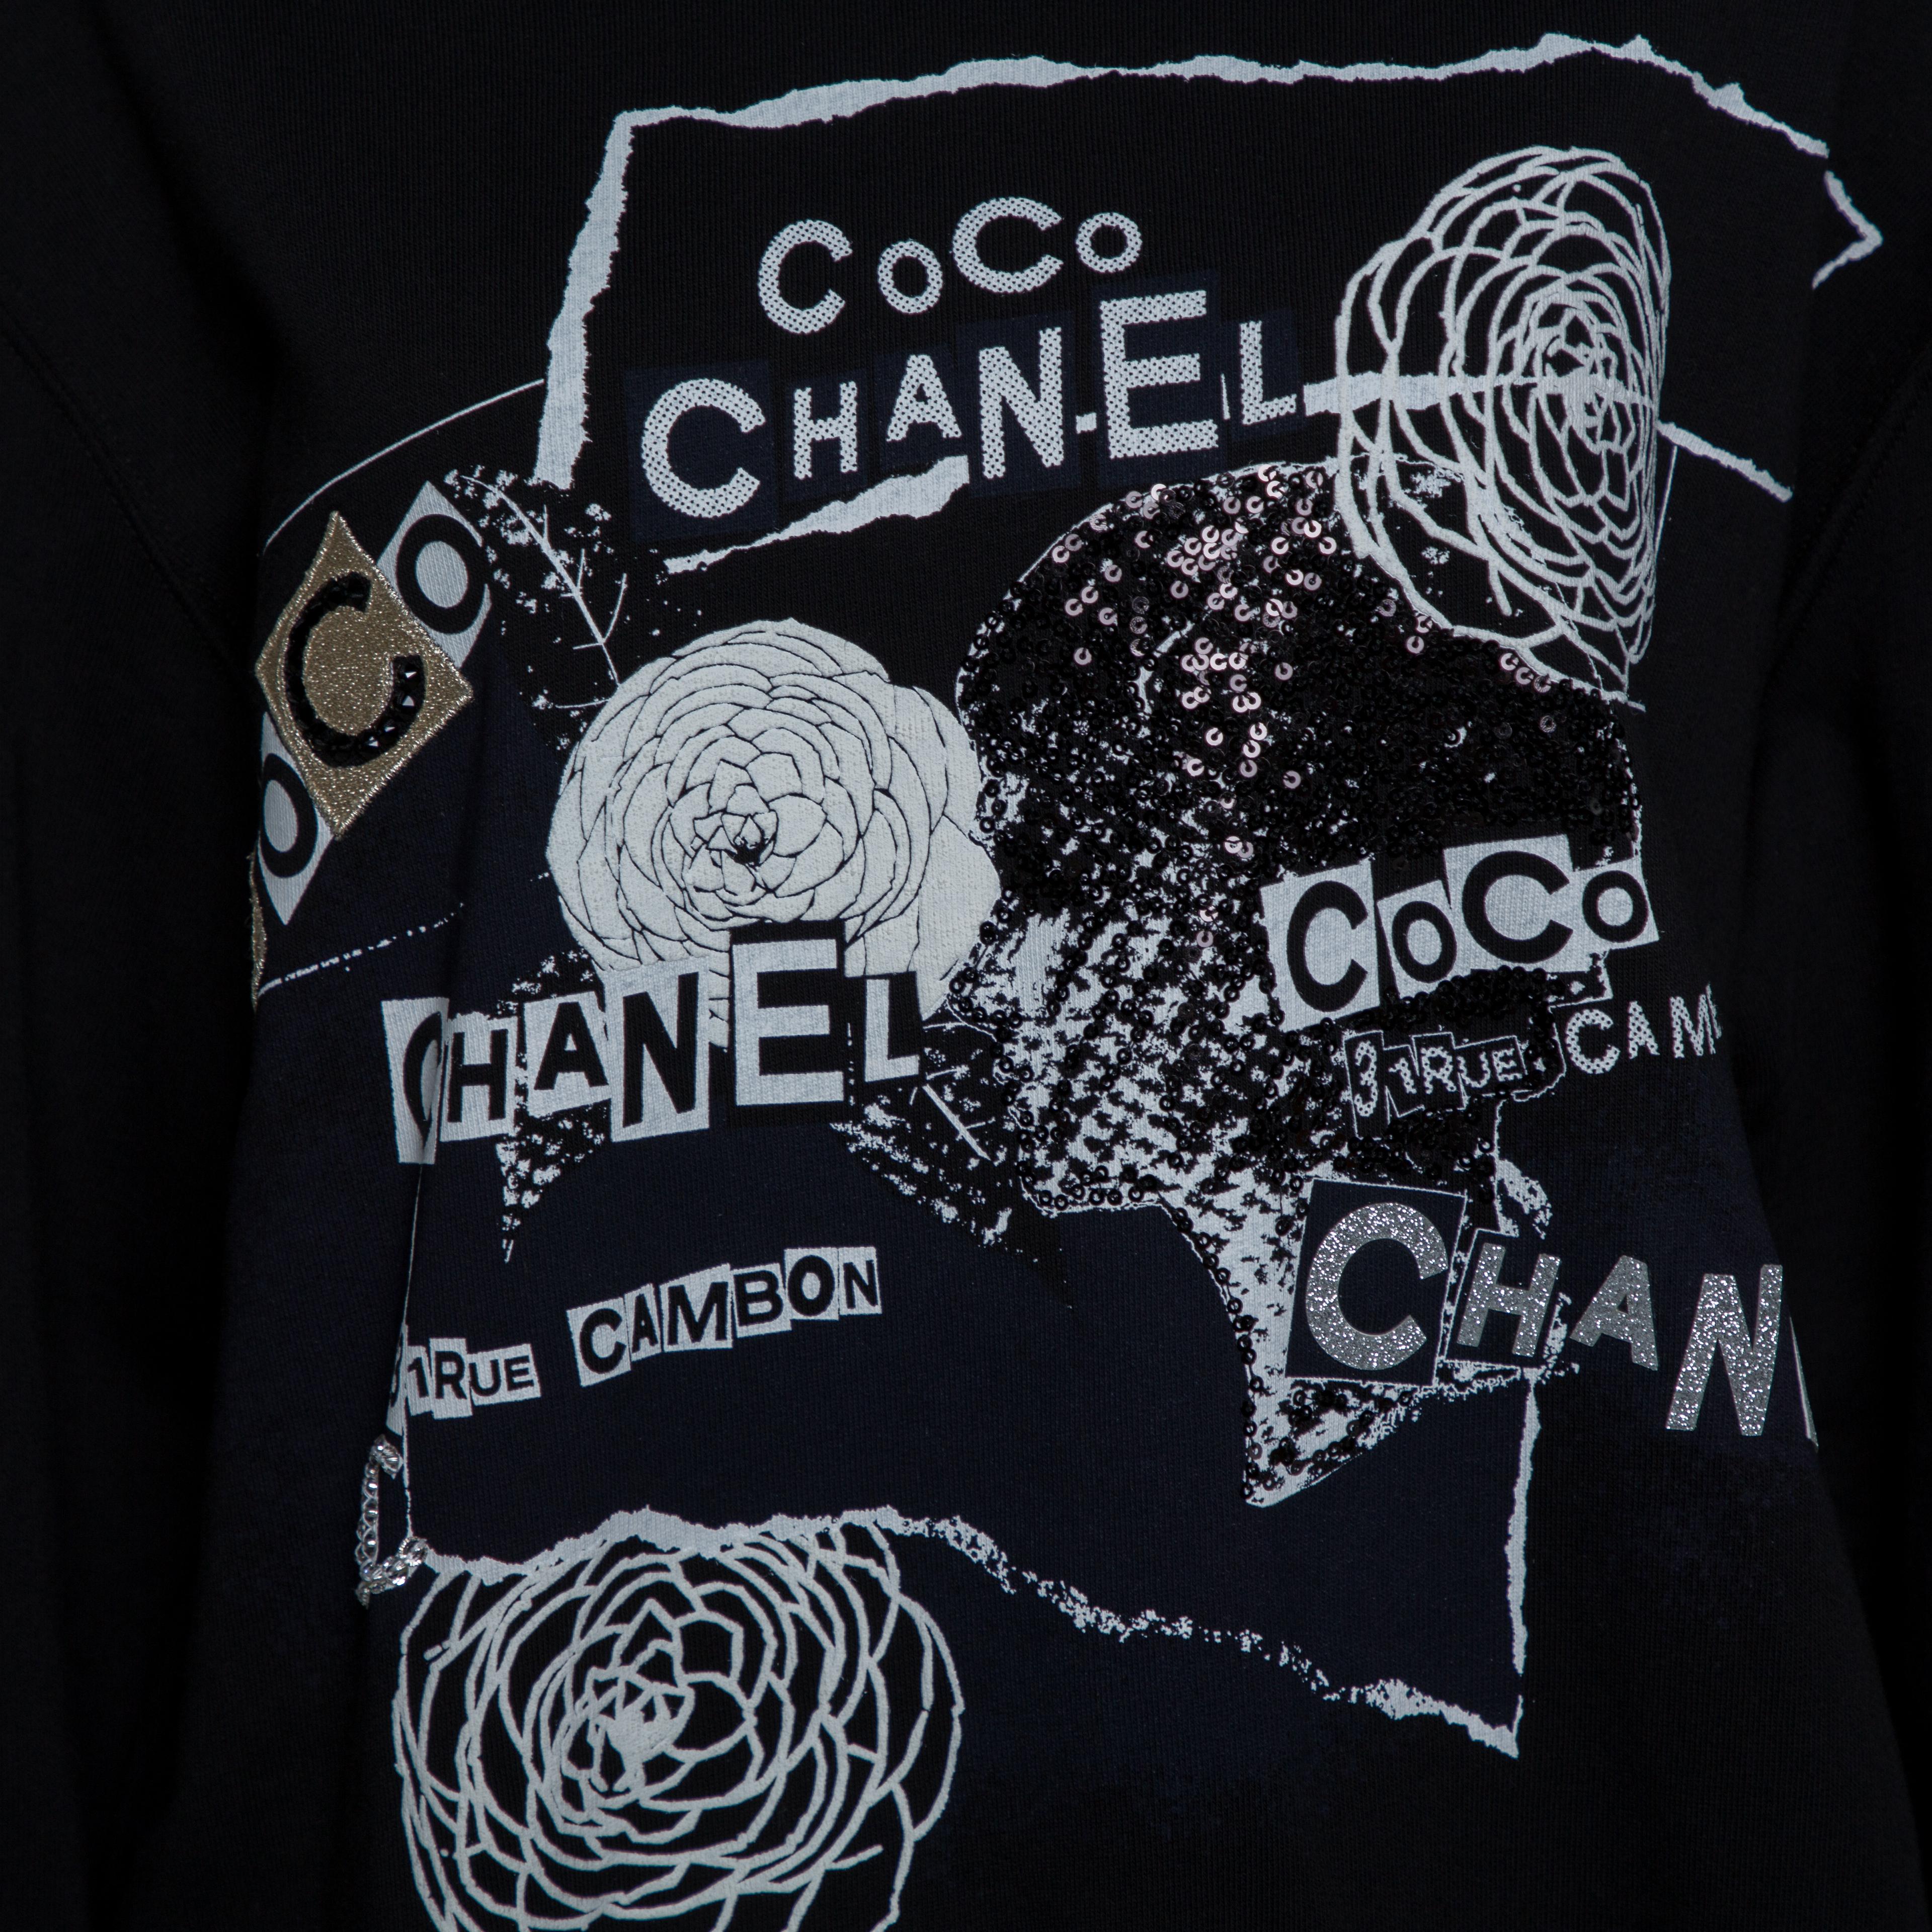 chanel black sweatshirt